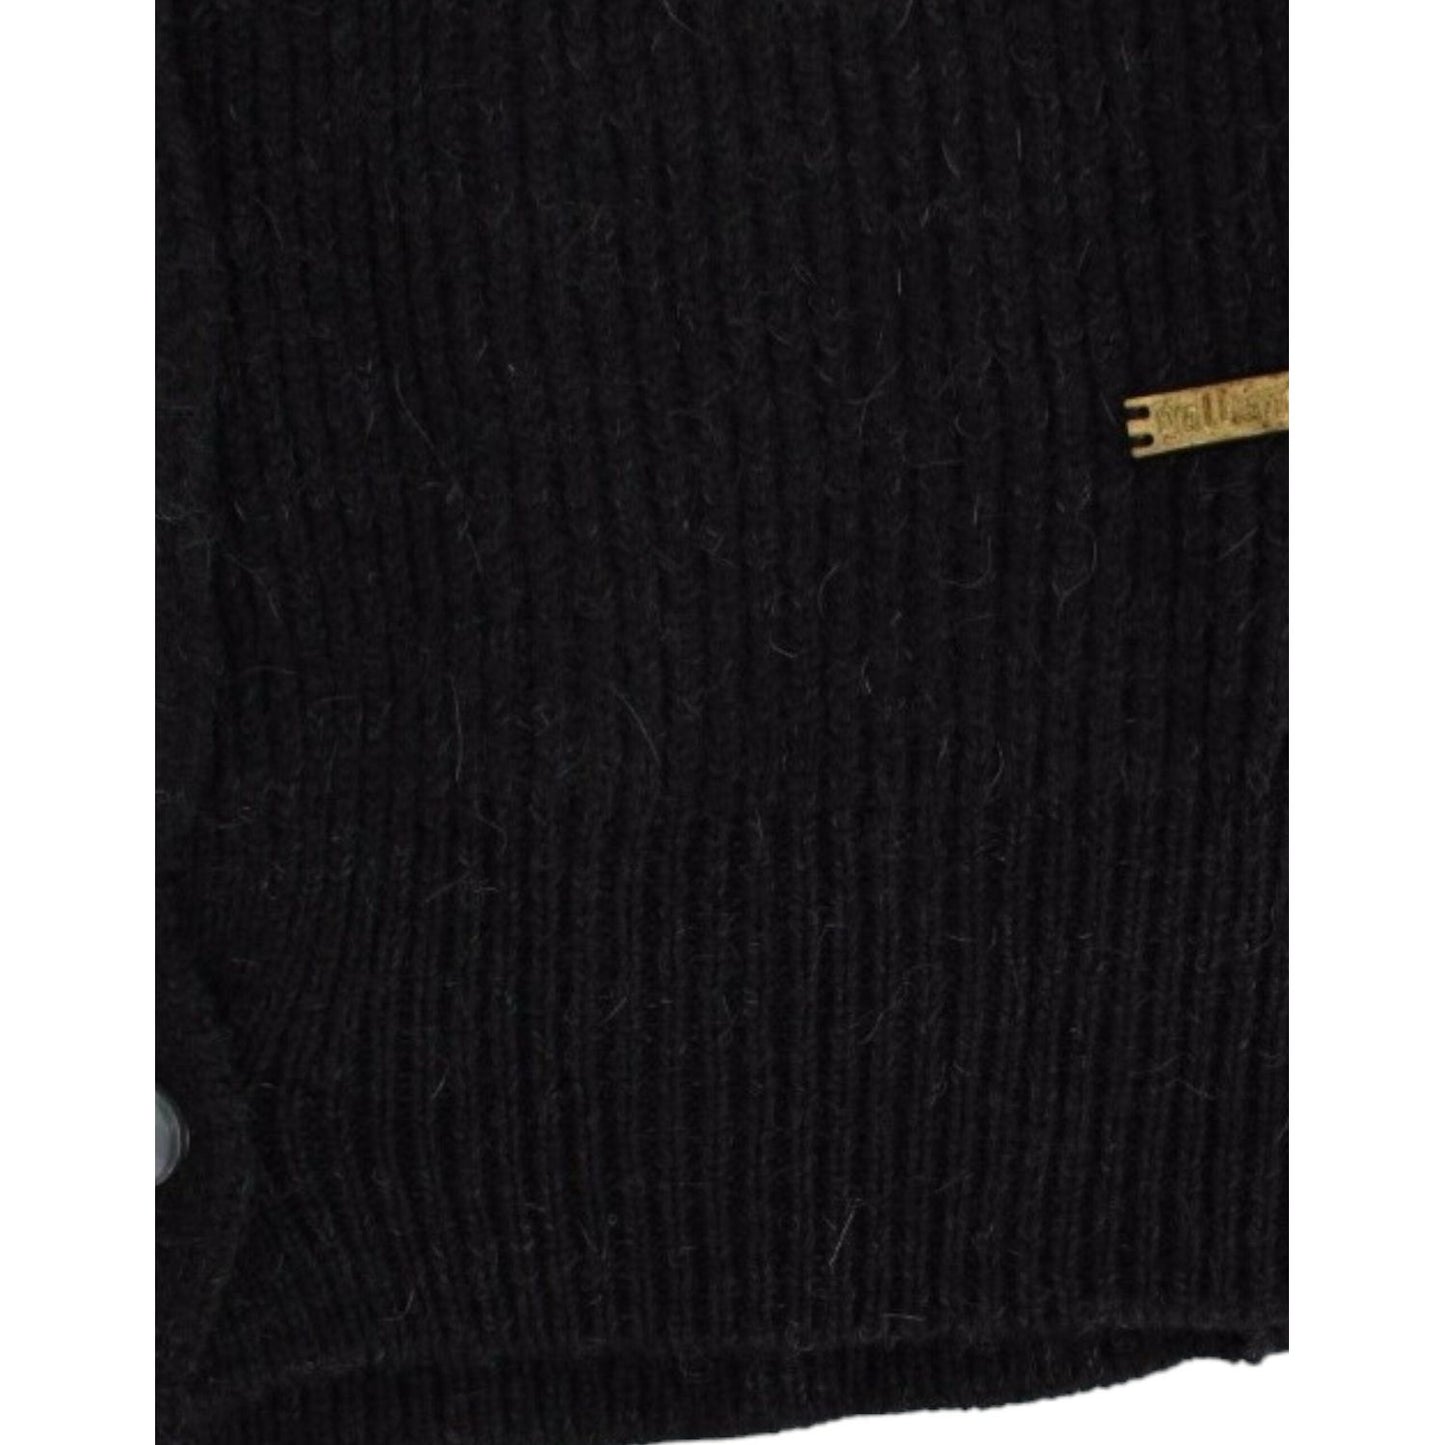 John Galliano Chic Transparent Back Woolen Cardigan black-wool-cardigan 5815-black-wool-cardigan-2-7-scaled-e4309df7-292.jpg